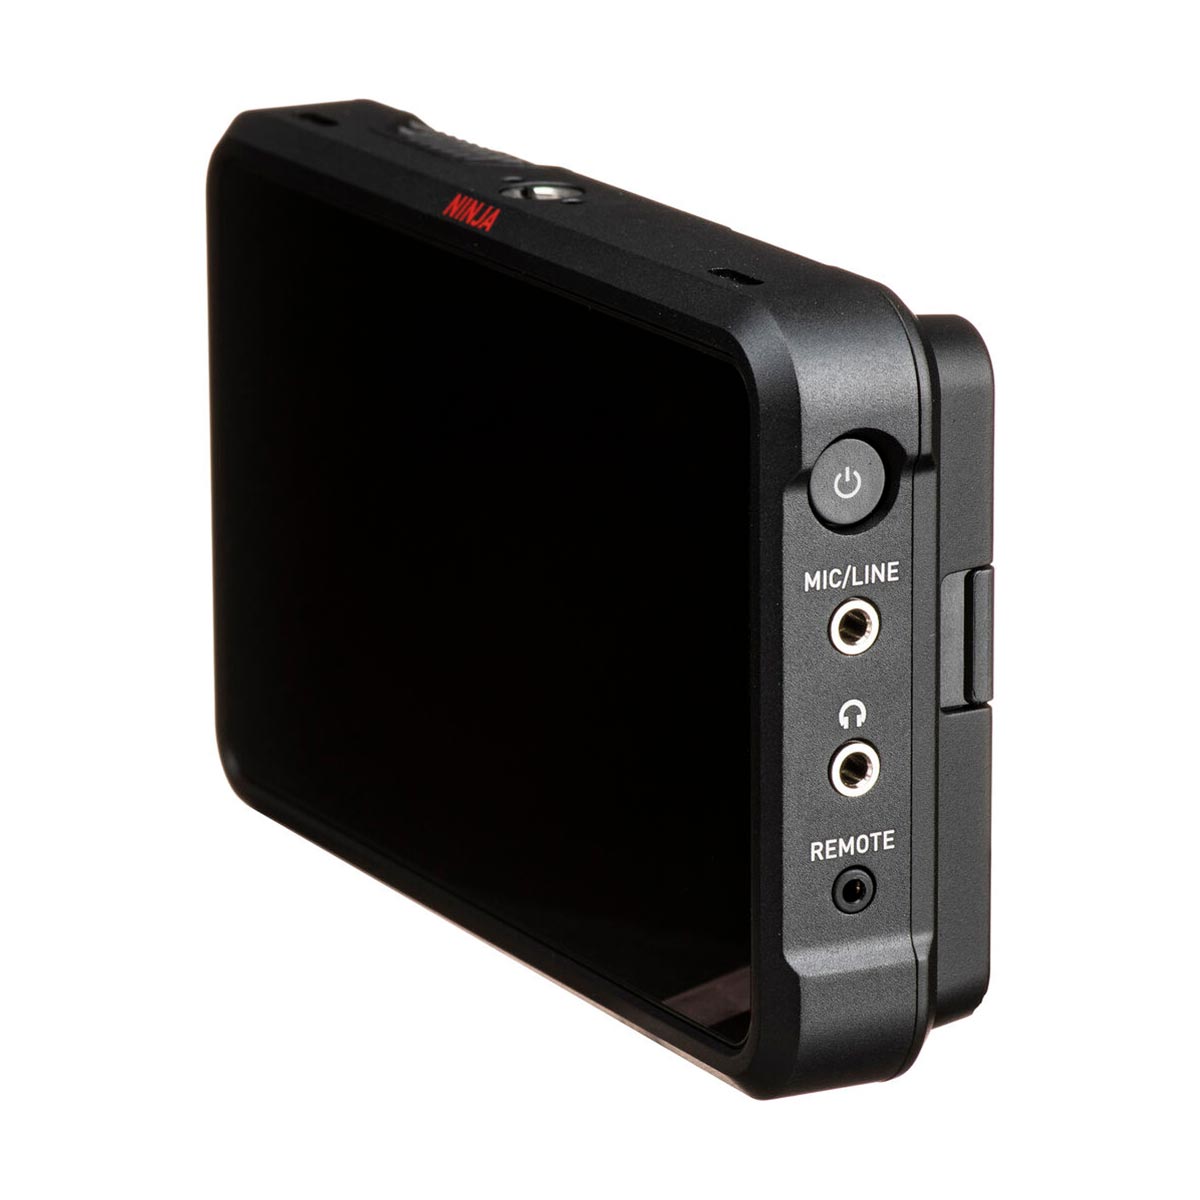 Atomos Ninja V Thin 5” 4K HDMI Recording Monitor *OPEN BOX*